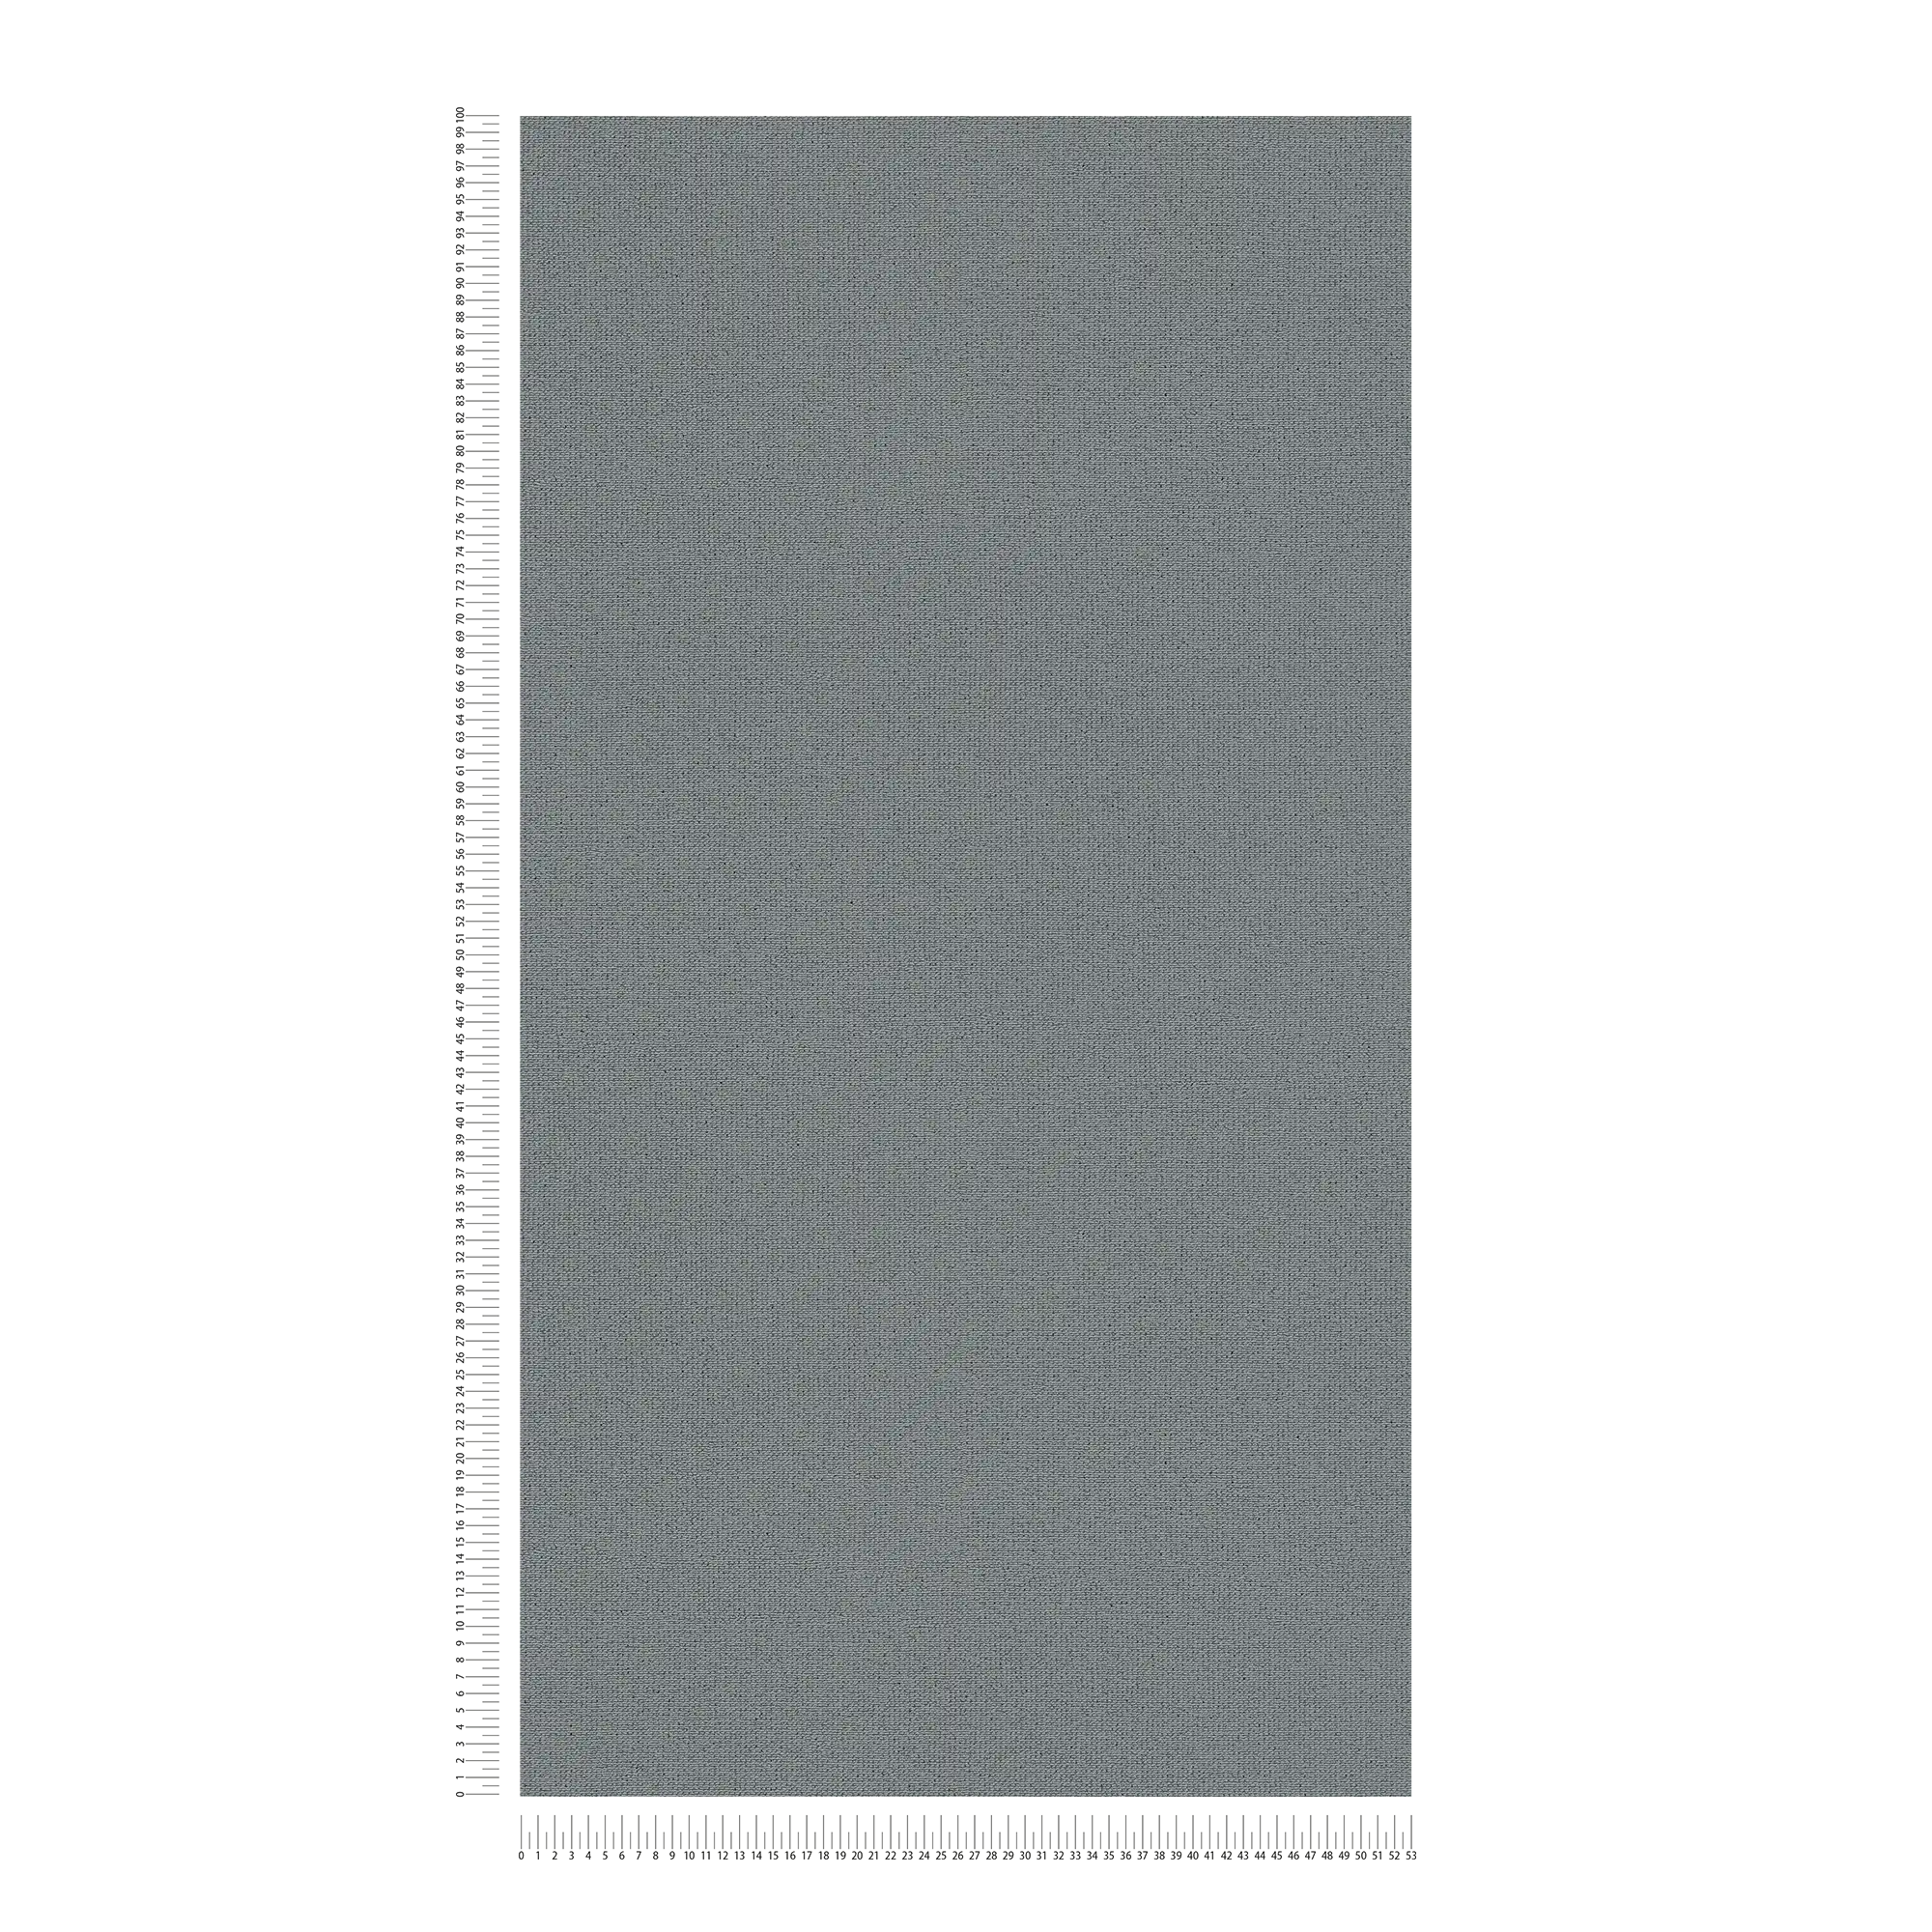             Papel pintado escandinavo liso en estructura mate y lino - gris oscuro
        